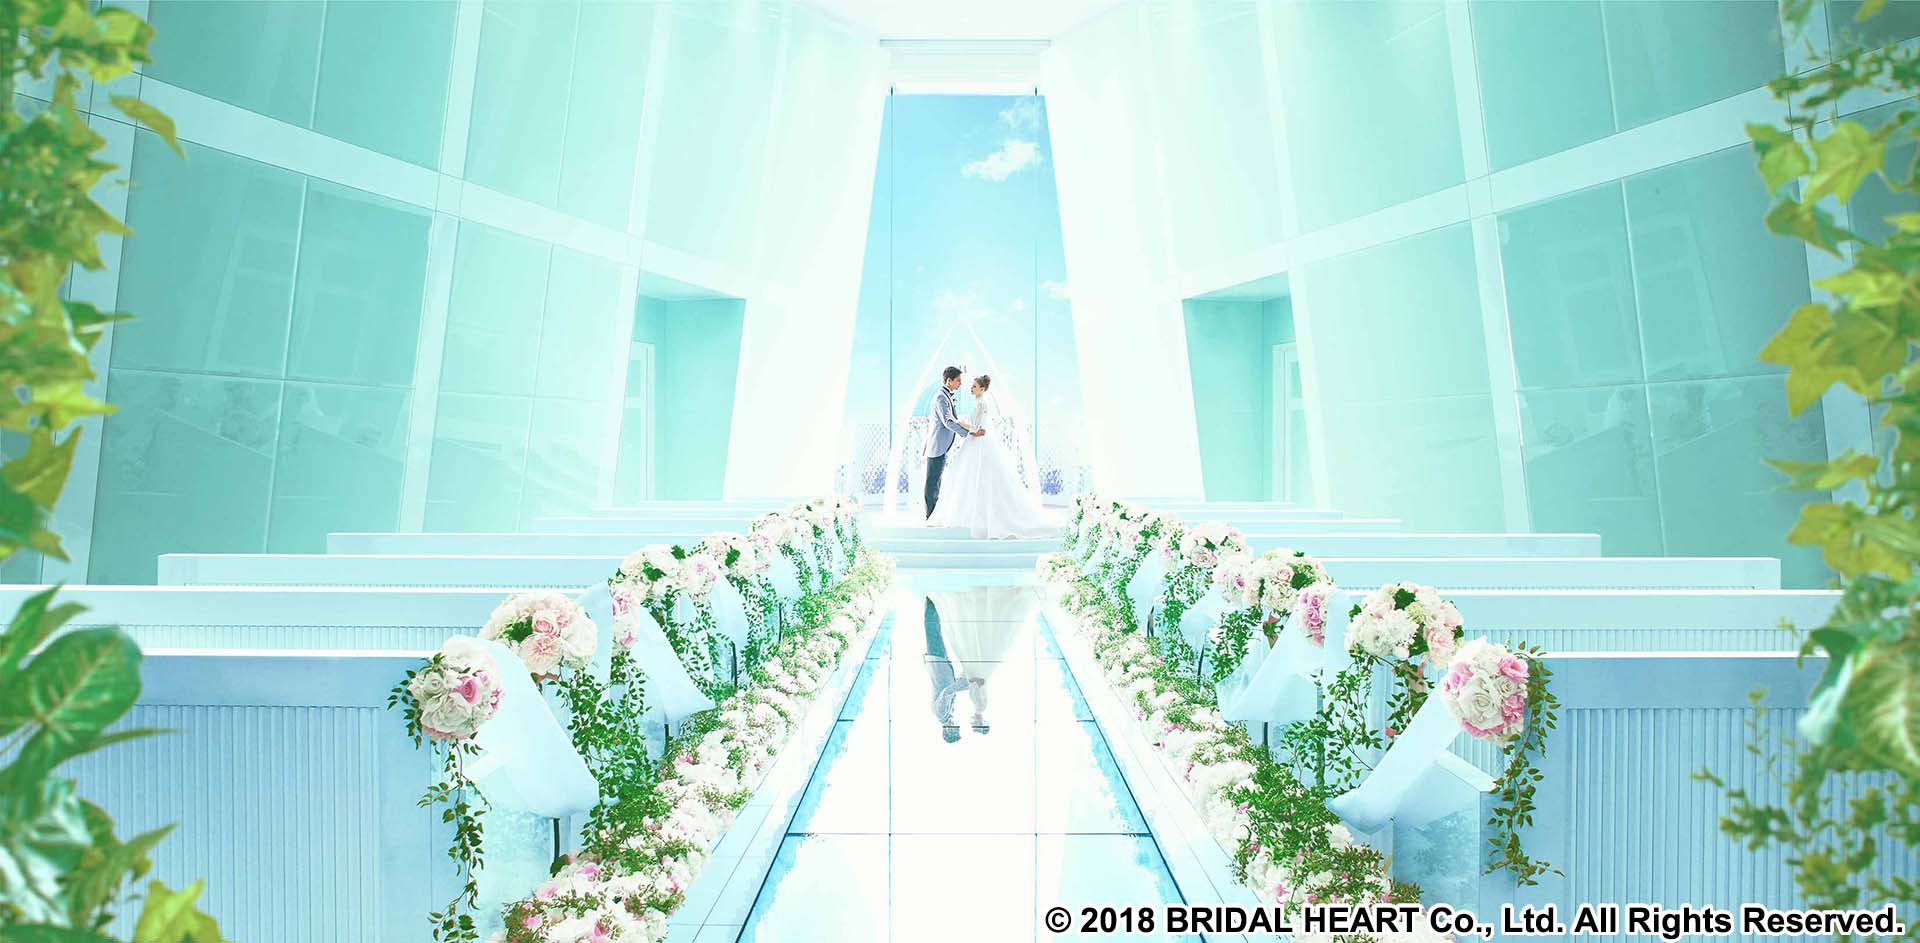 SE将推出《最终幻想14》主题婚礼 为新人留下浪漫回忆